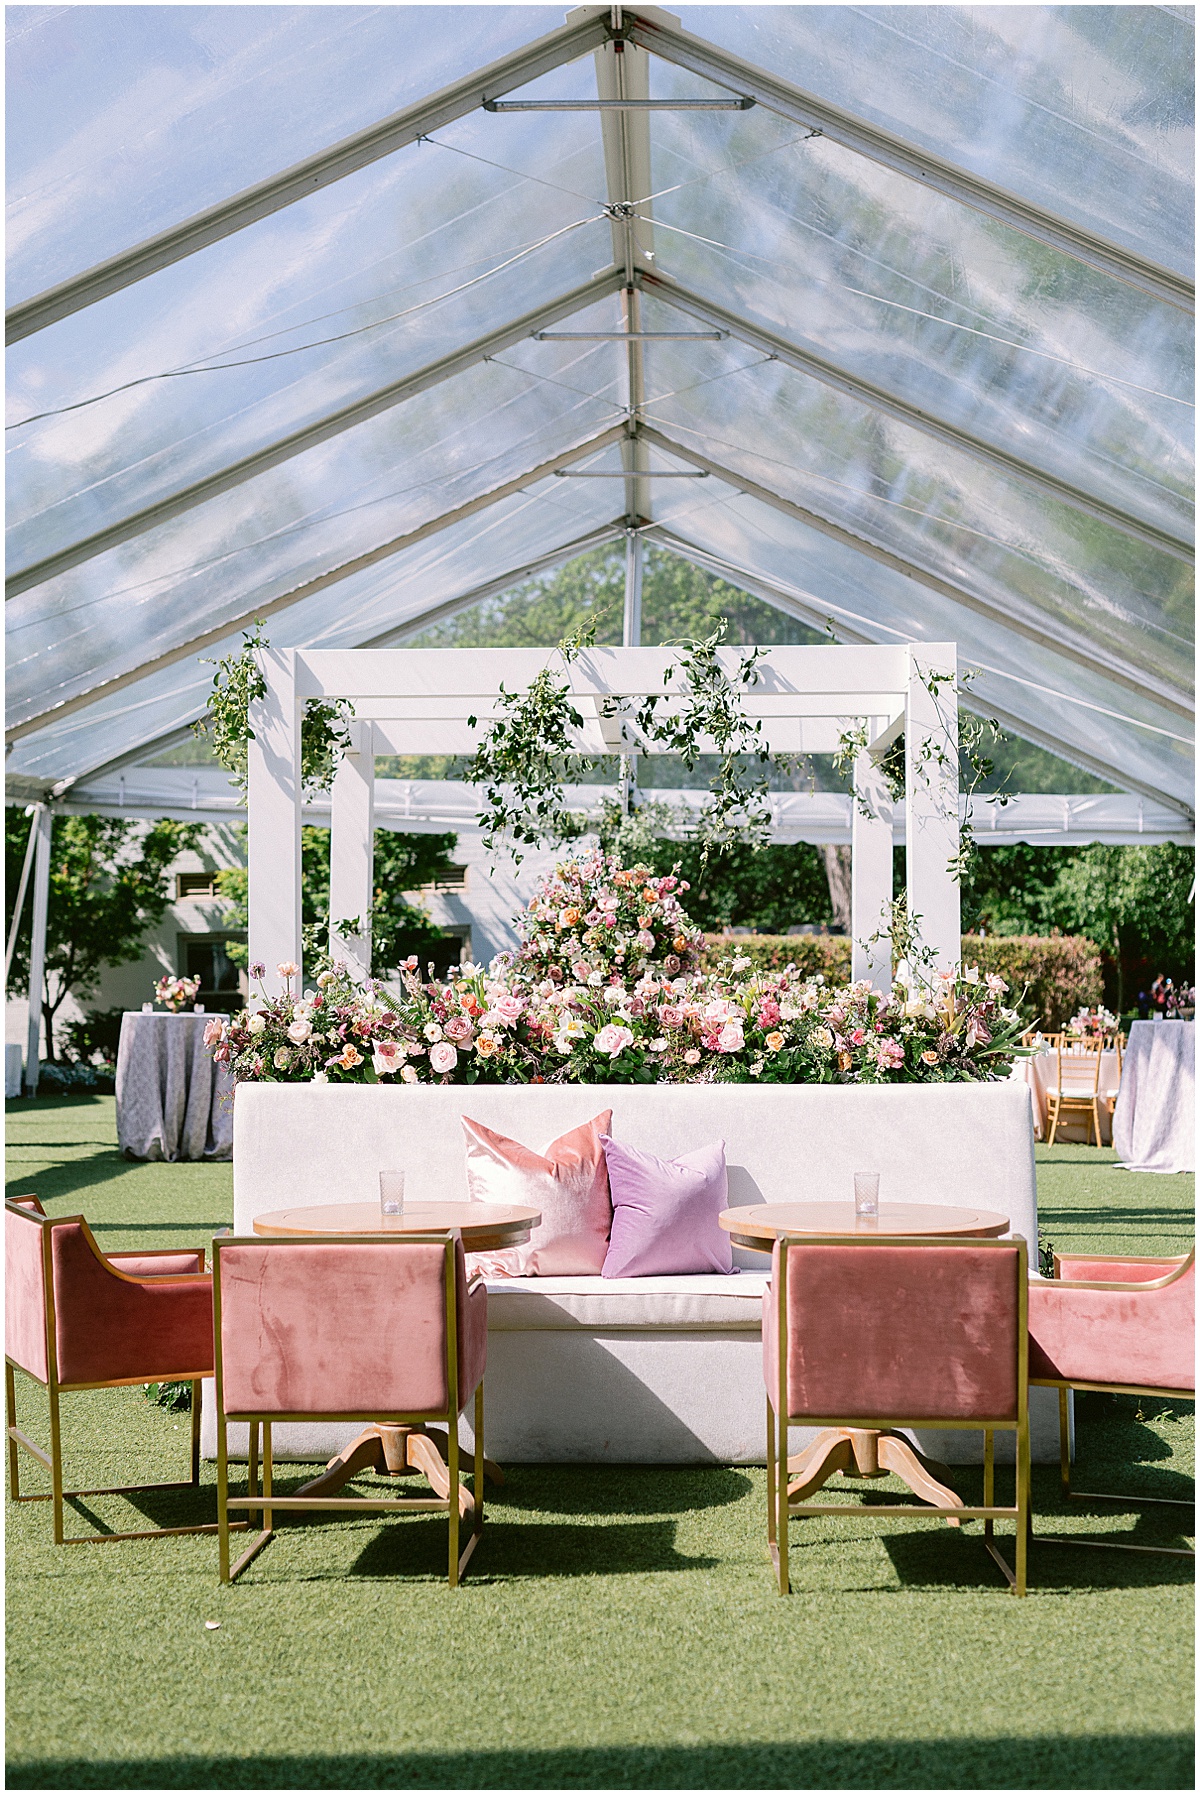 Wedding lounge area at outdoor wedding reception at the Dallas Arboretum